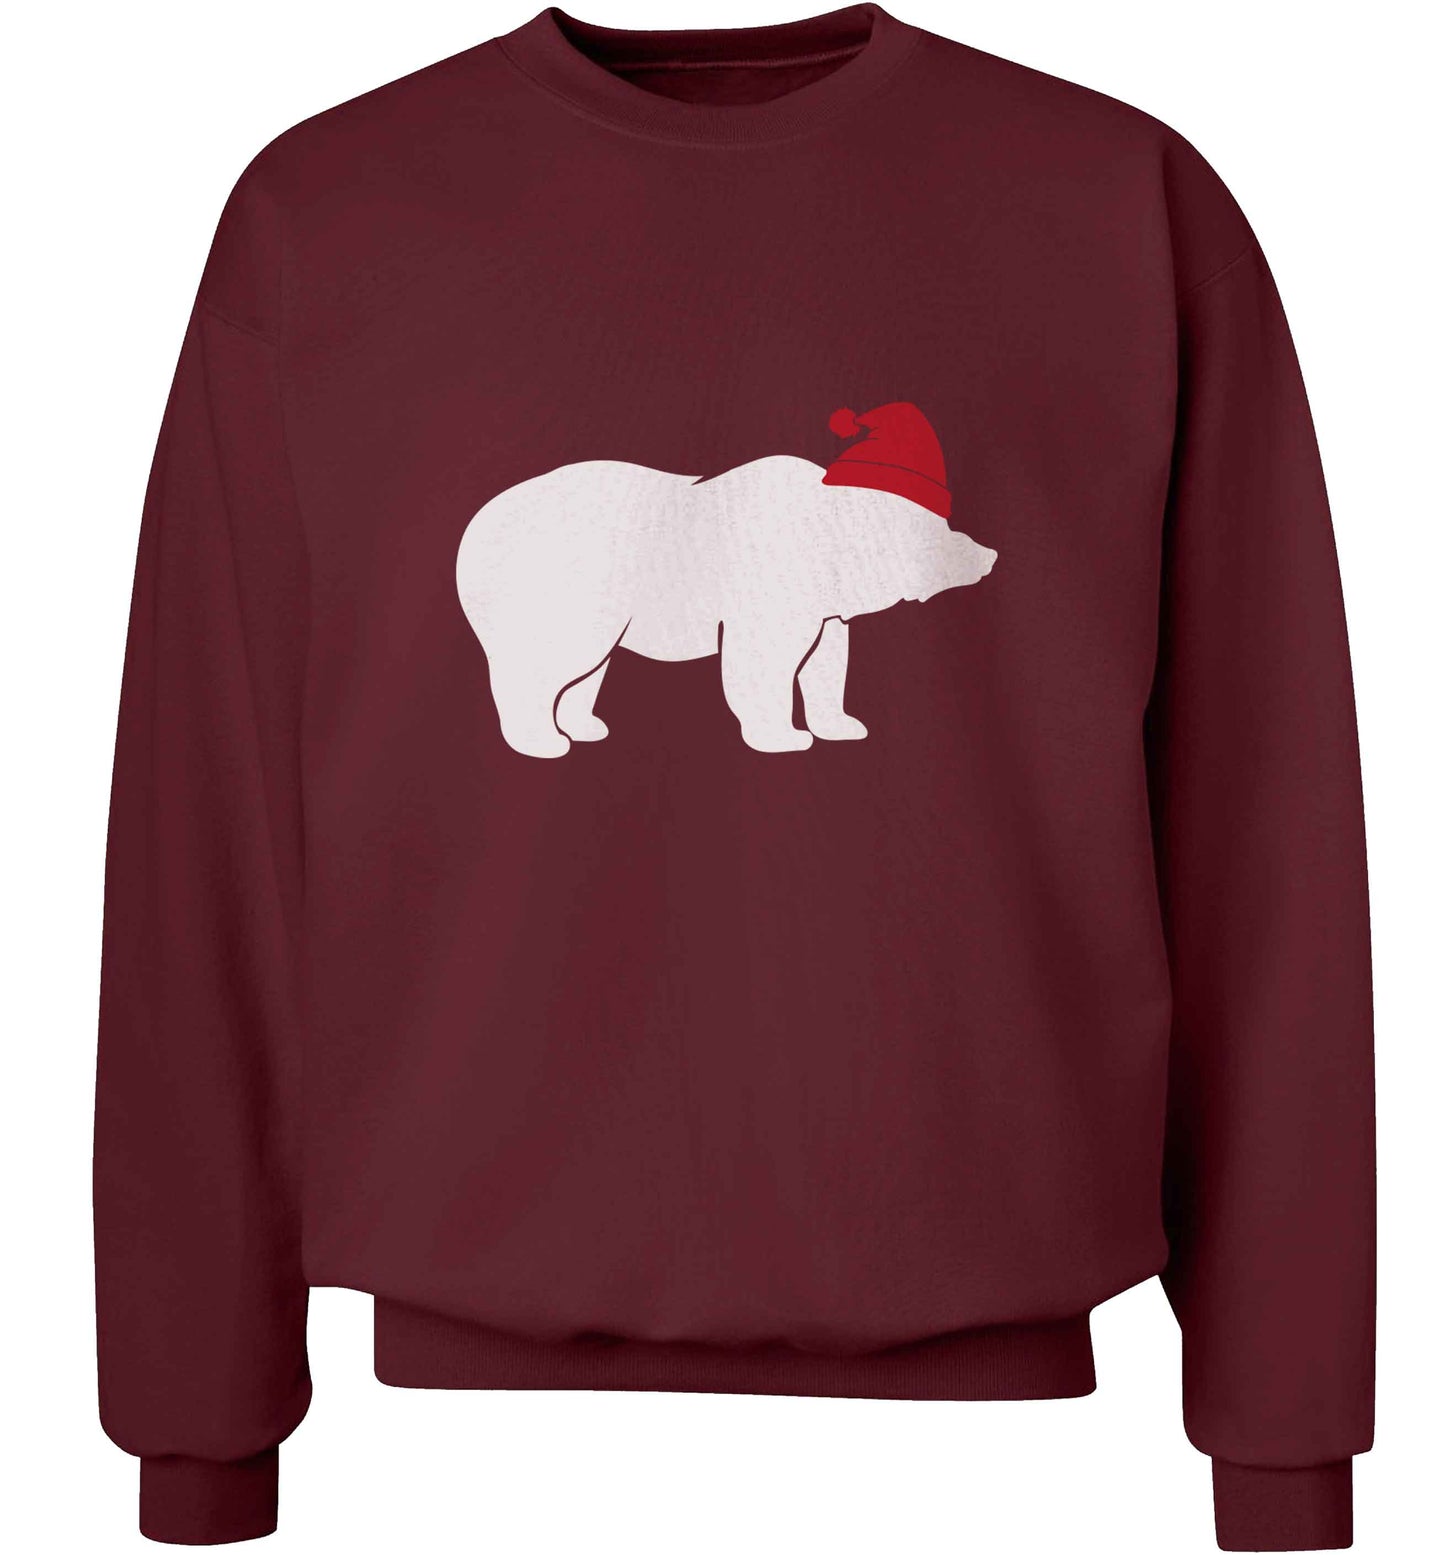 Blue bear Santa adult's unisex maroon sweater 2XL